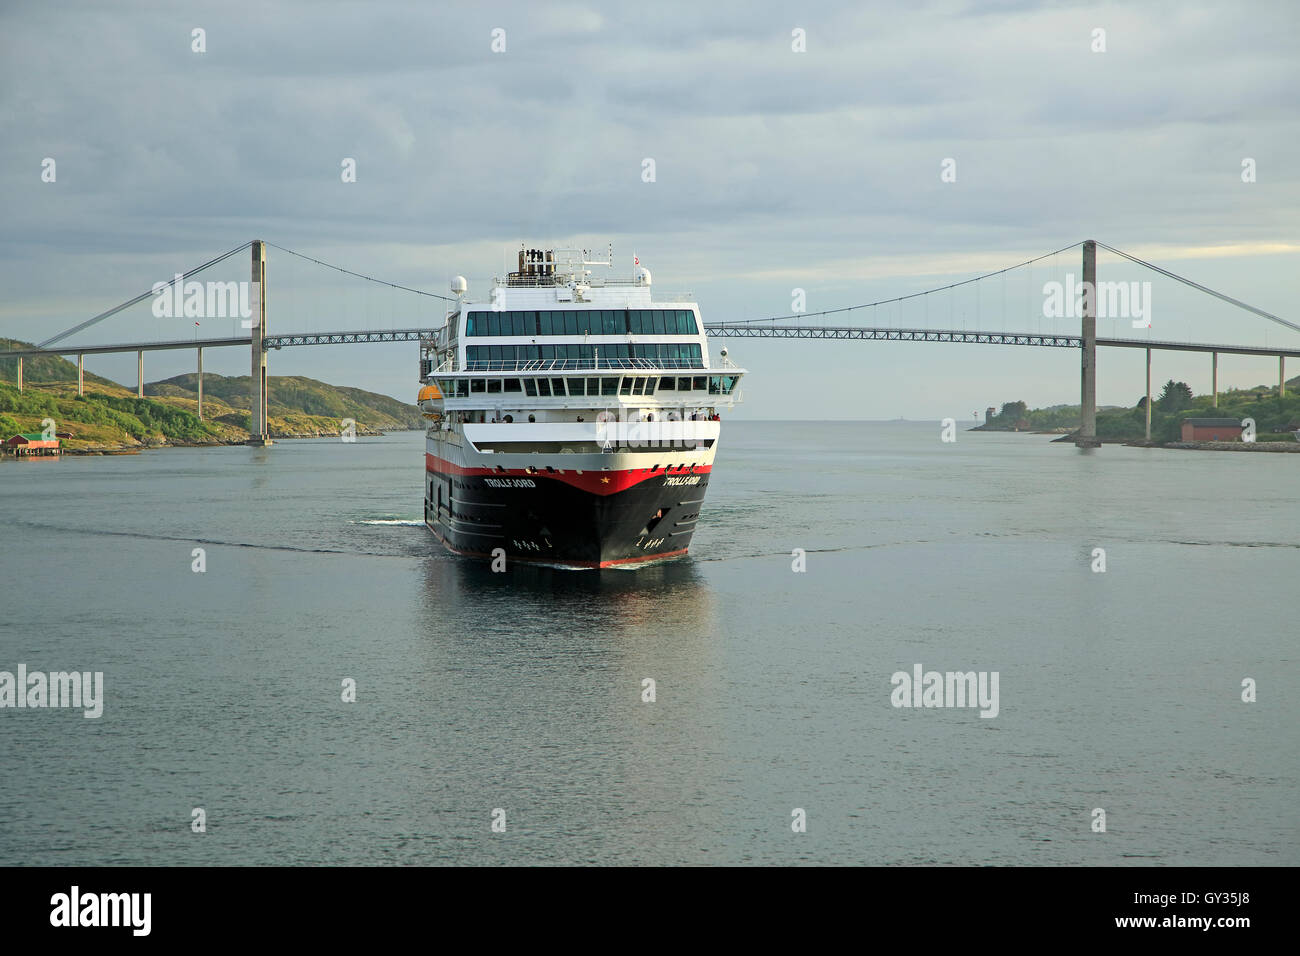 Hurtigruten ship 'Trollfjord' arriving at port of Rorvik, Norway with road bridge Stock Photo